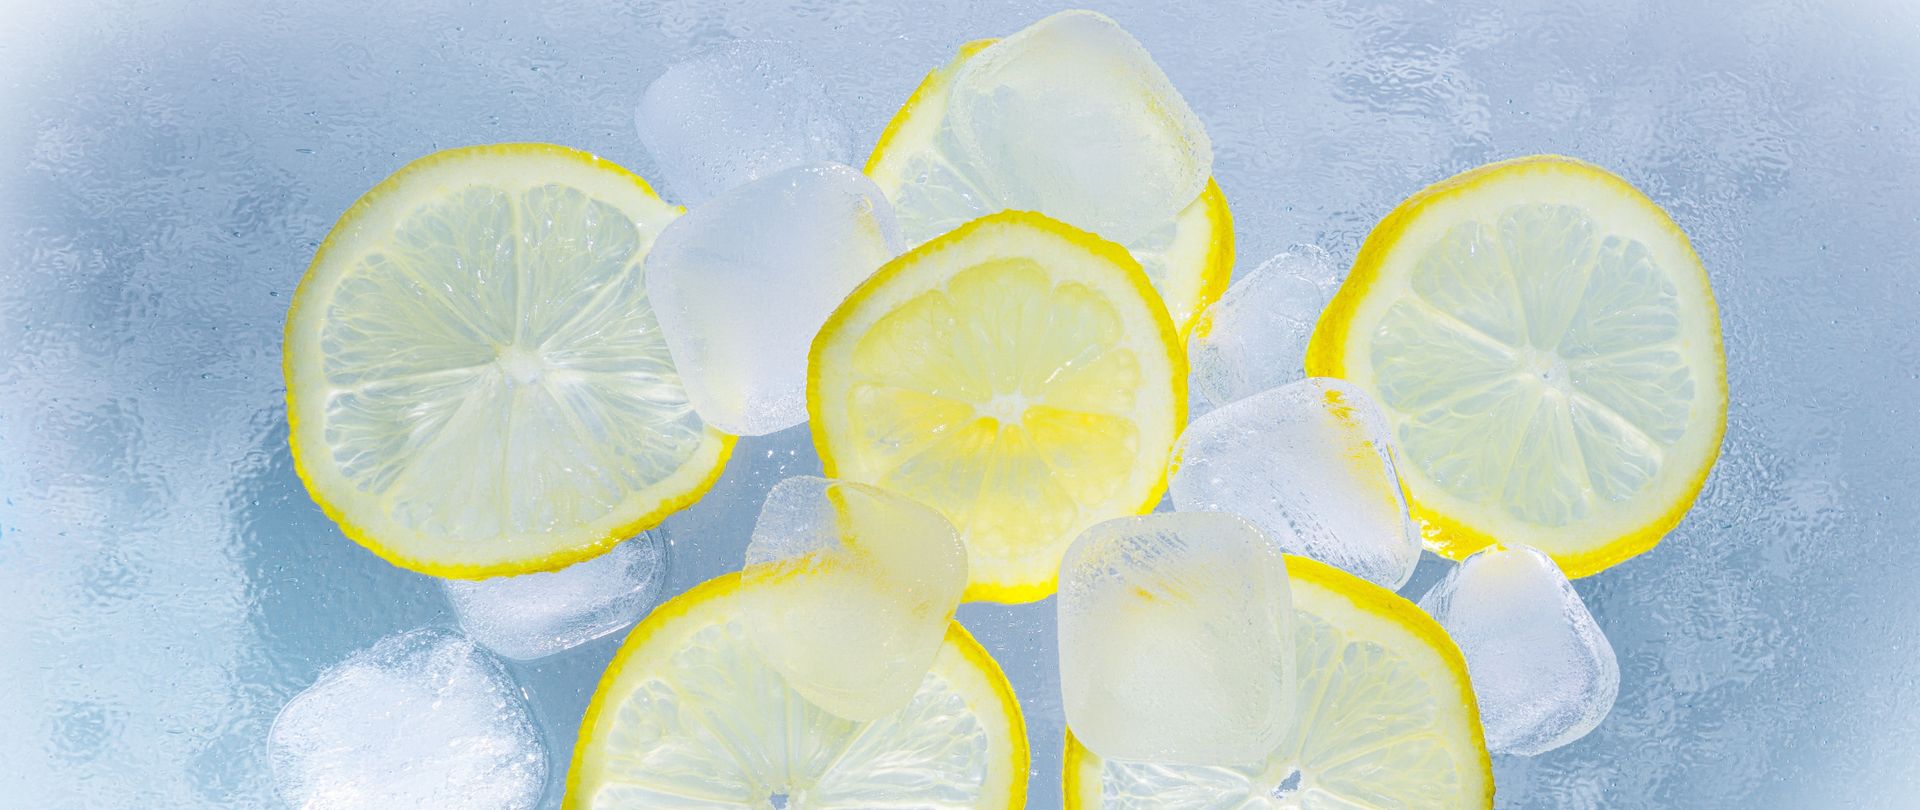 ice and lemon